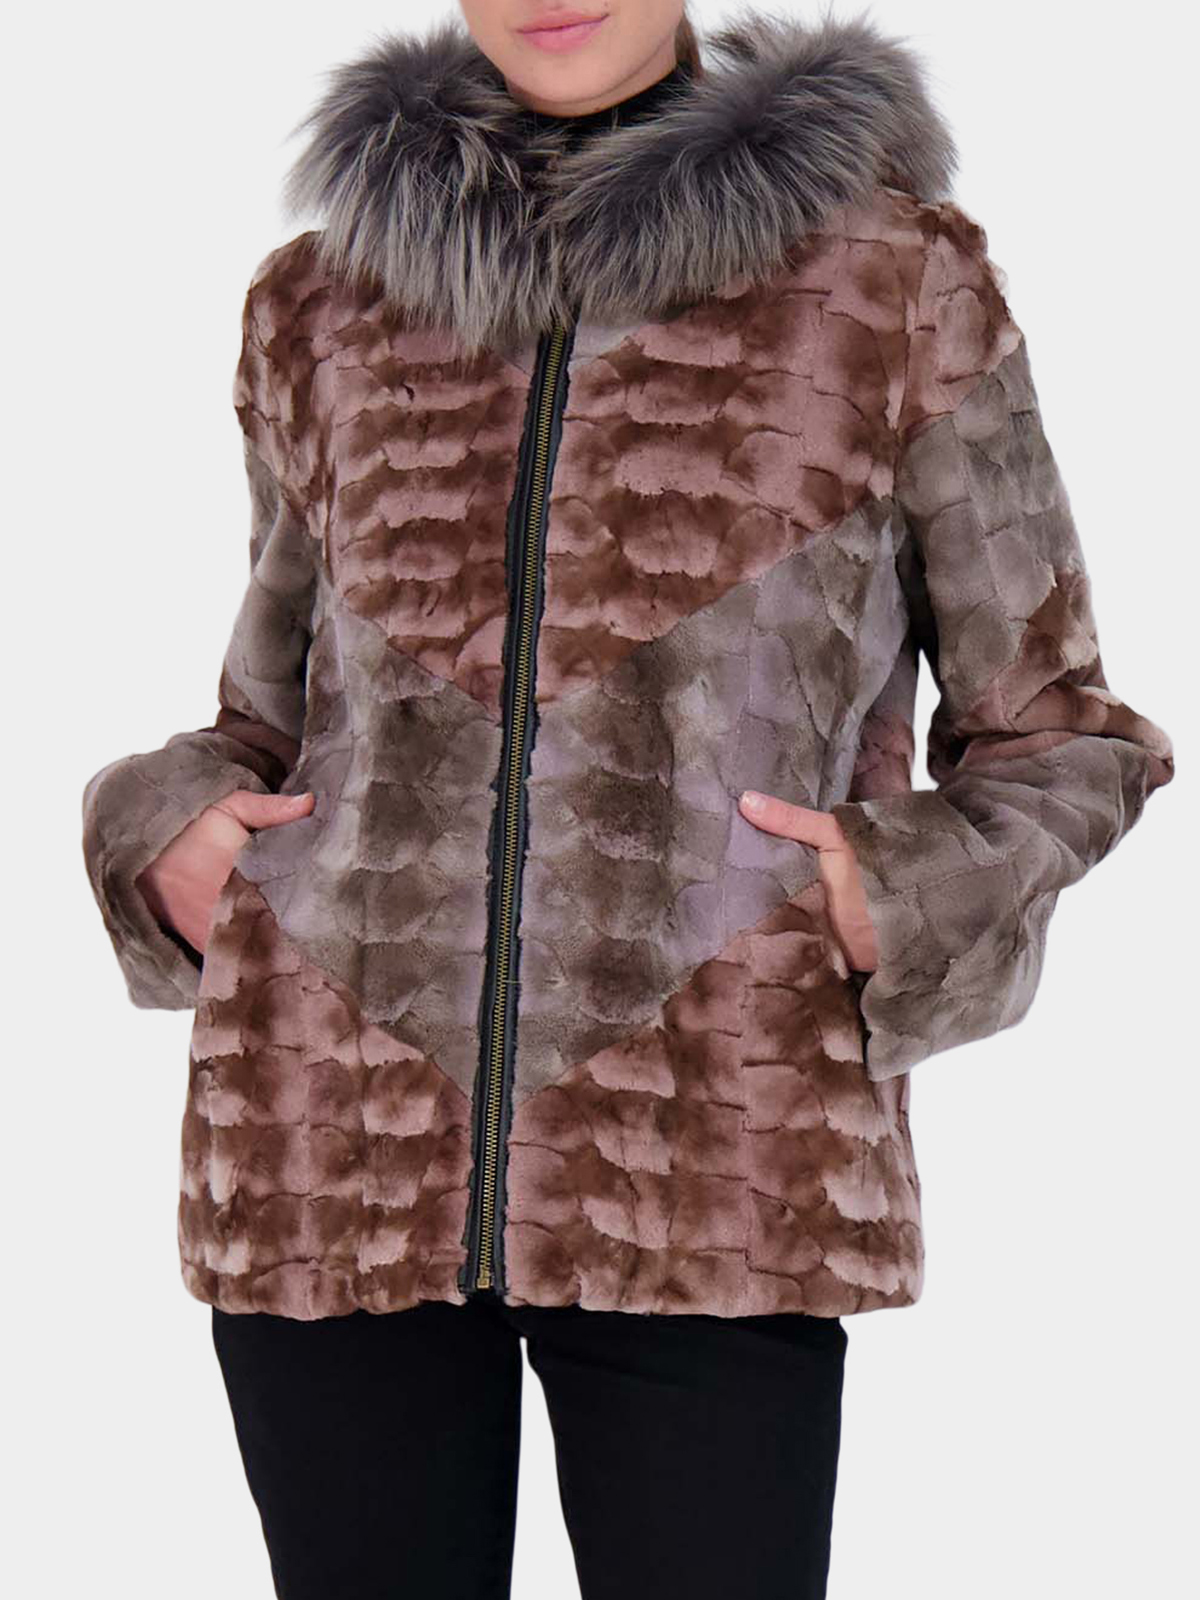 Day Furs Woman's Black Knit Rex Rabbit Fur Jacket